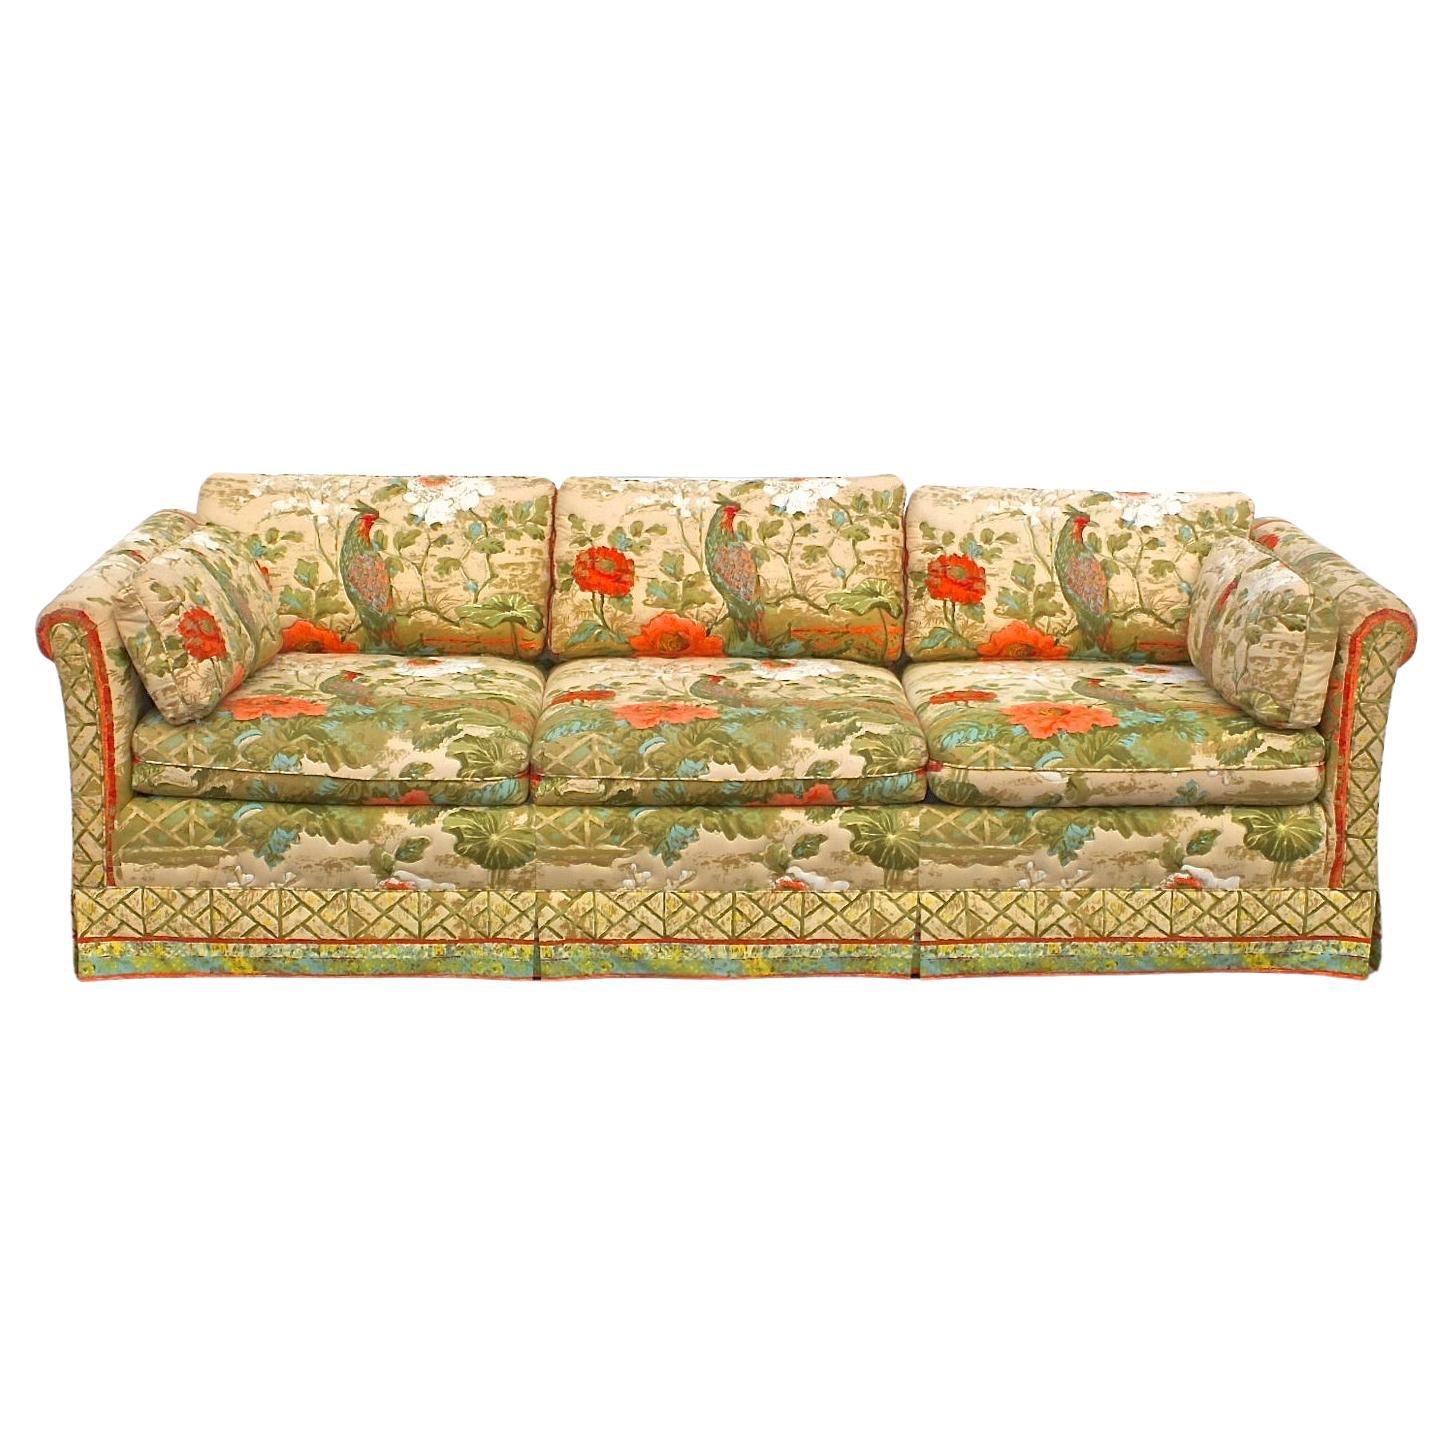 “Palm Beach" Sofa in Greeff Peony Garden